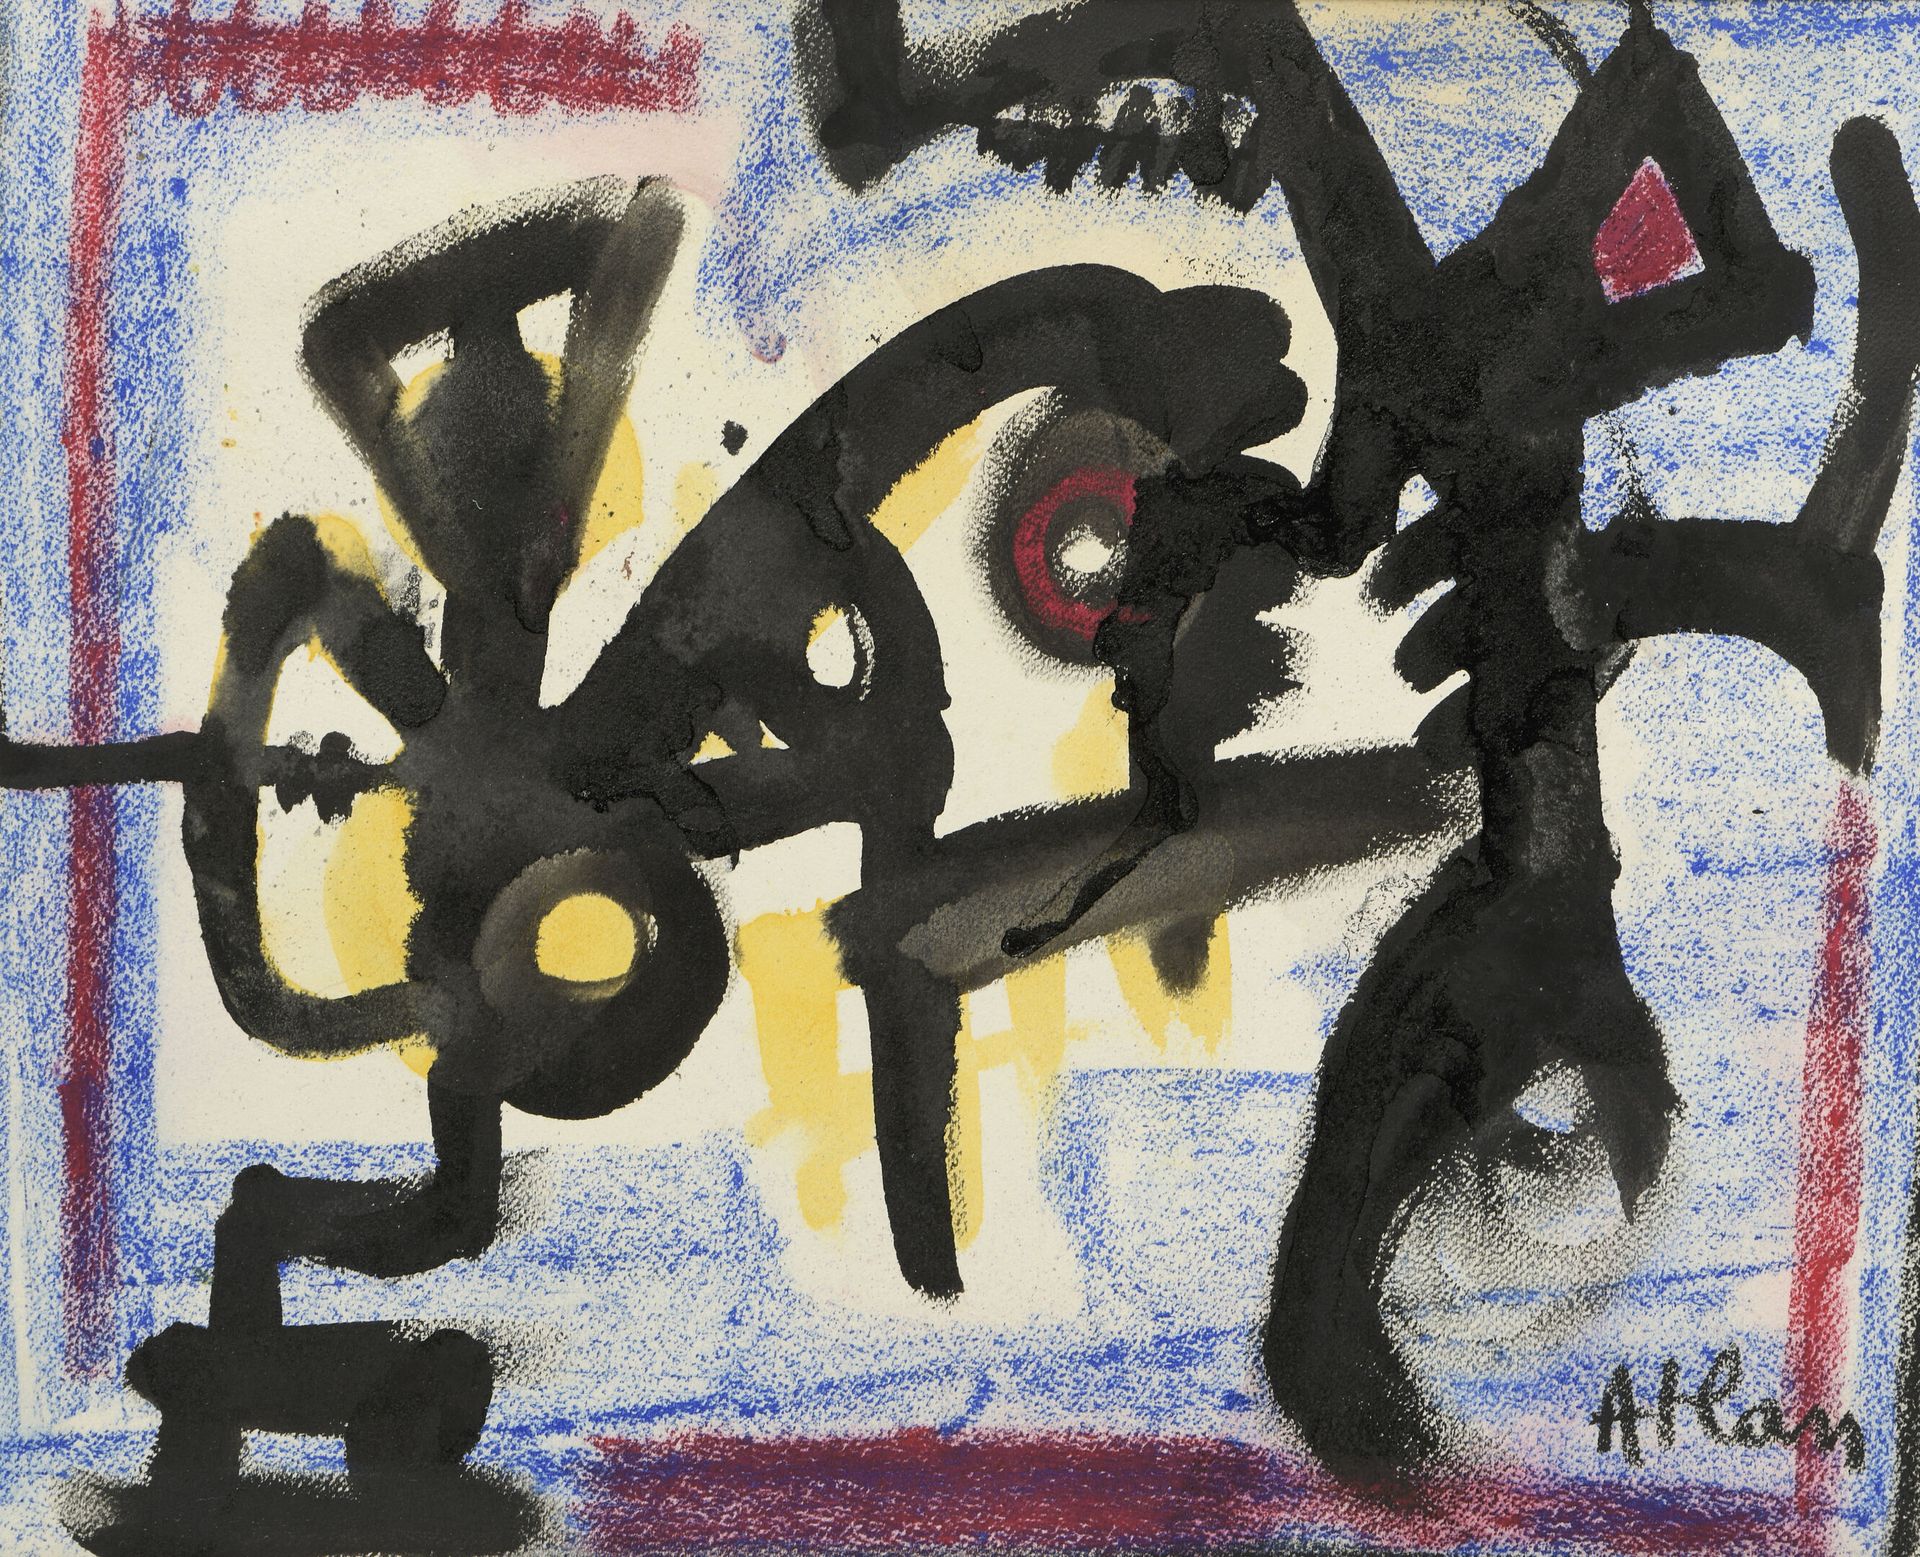 Null 让-米歇尔-阿特兰(1913-1960)

无题》，1955年

粉彩、水彩和墨水，右下方有签名

H.31.5厘米 - 宽39.5厘米（观看时） D&hellip;